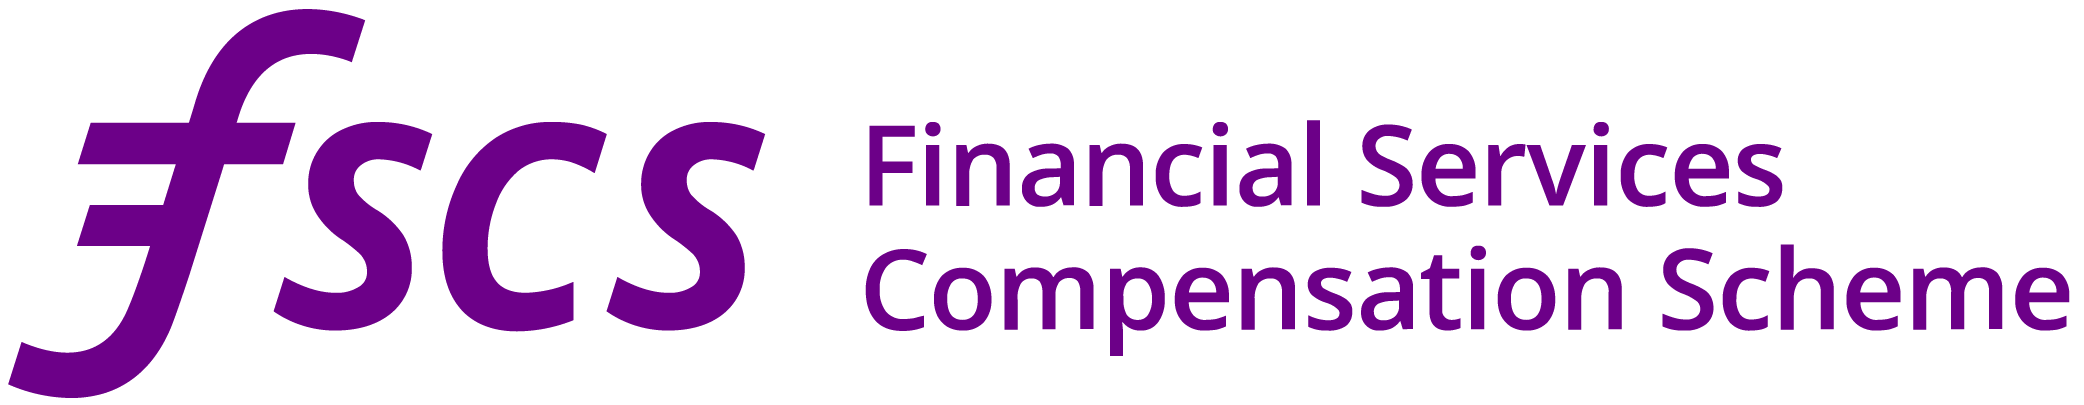 logo for Financial Services Compensation Scheme